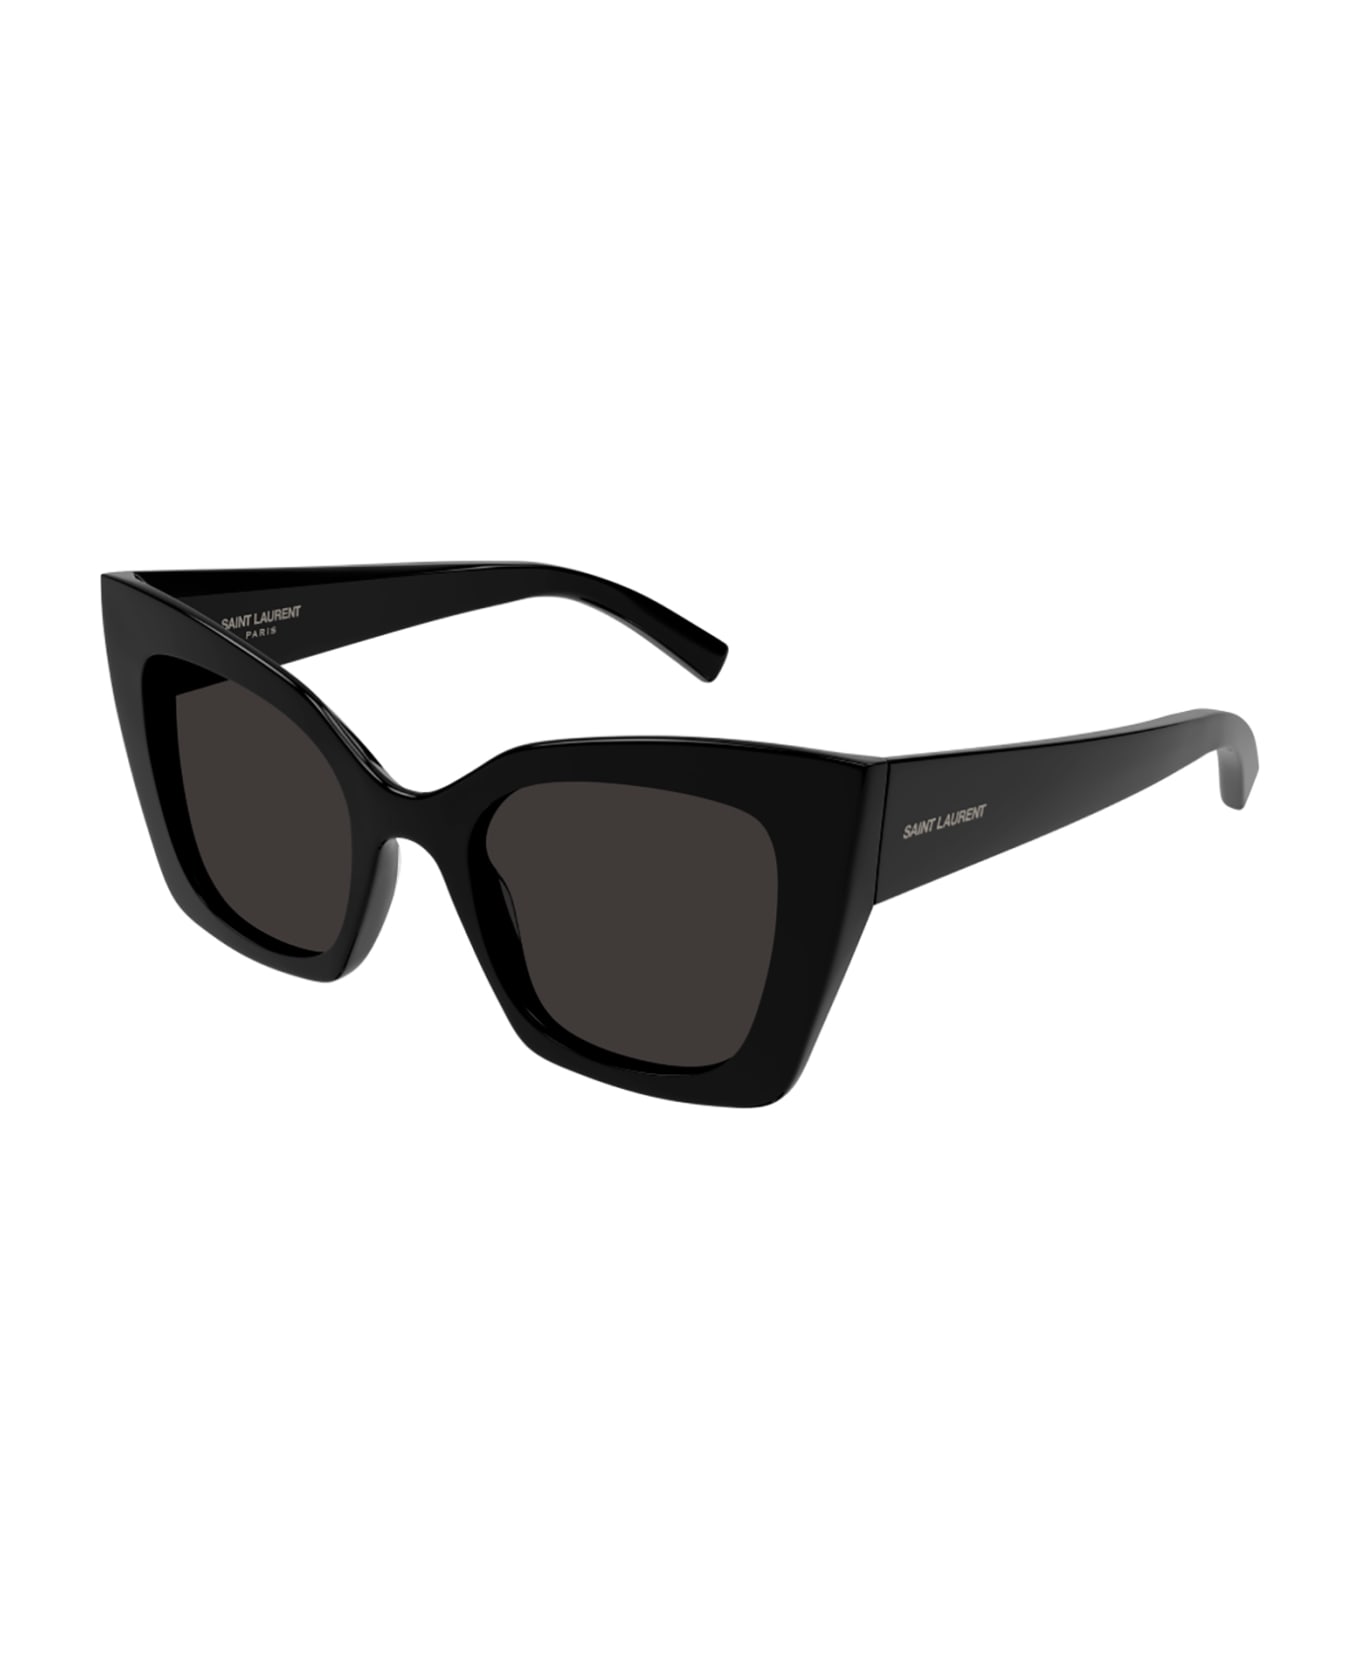 Saint Laurent Eyewear 1e784id0a - sunglasses from New York label